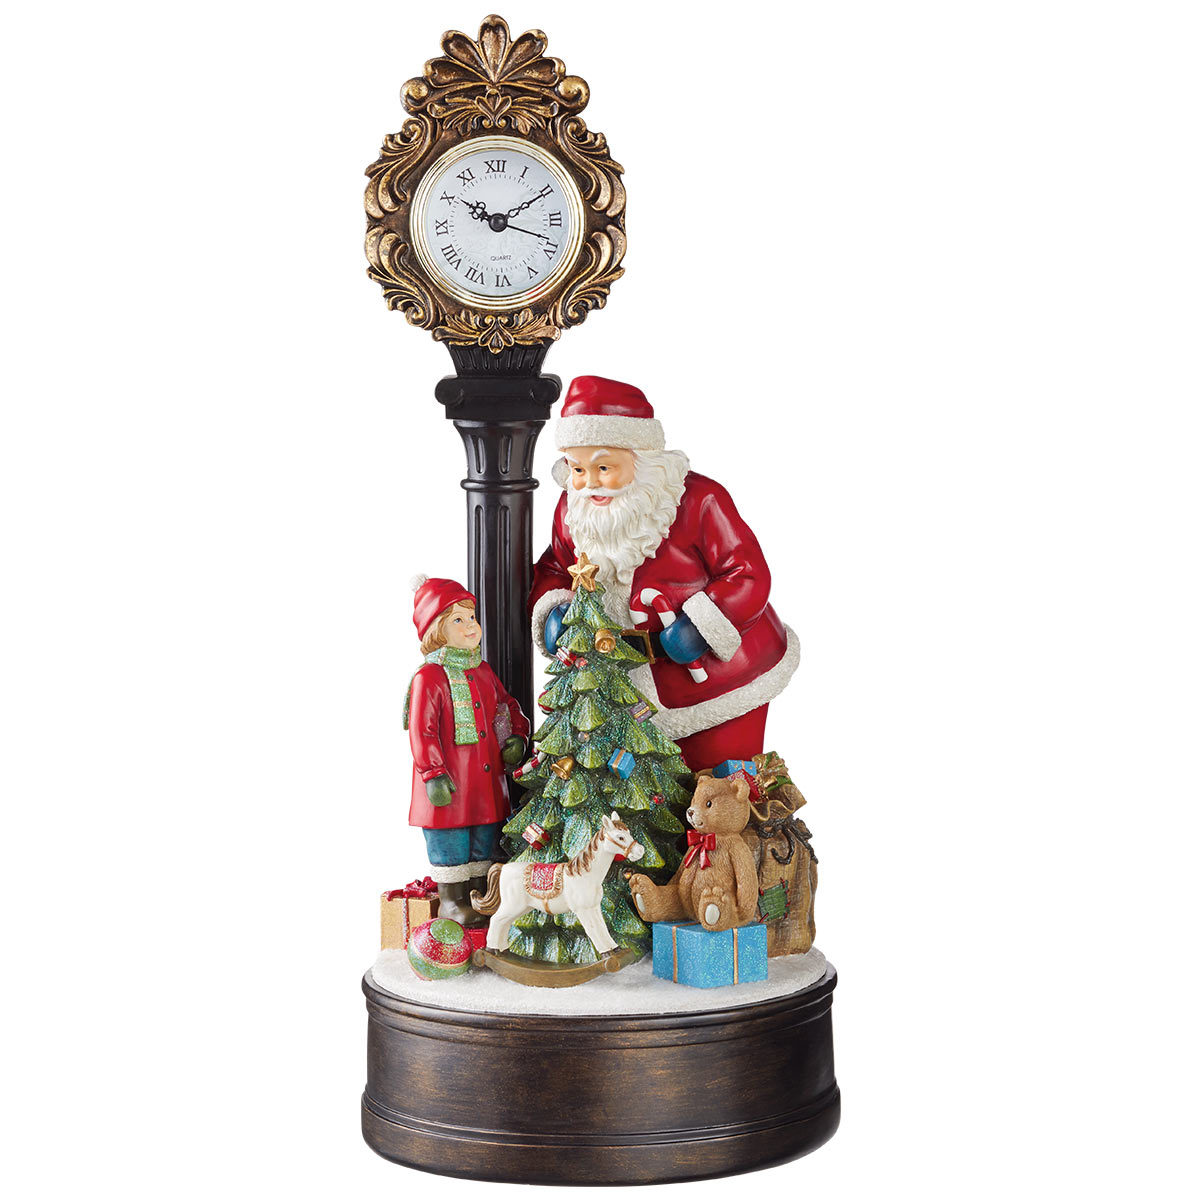 Santa holiday clock without background